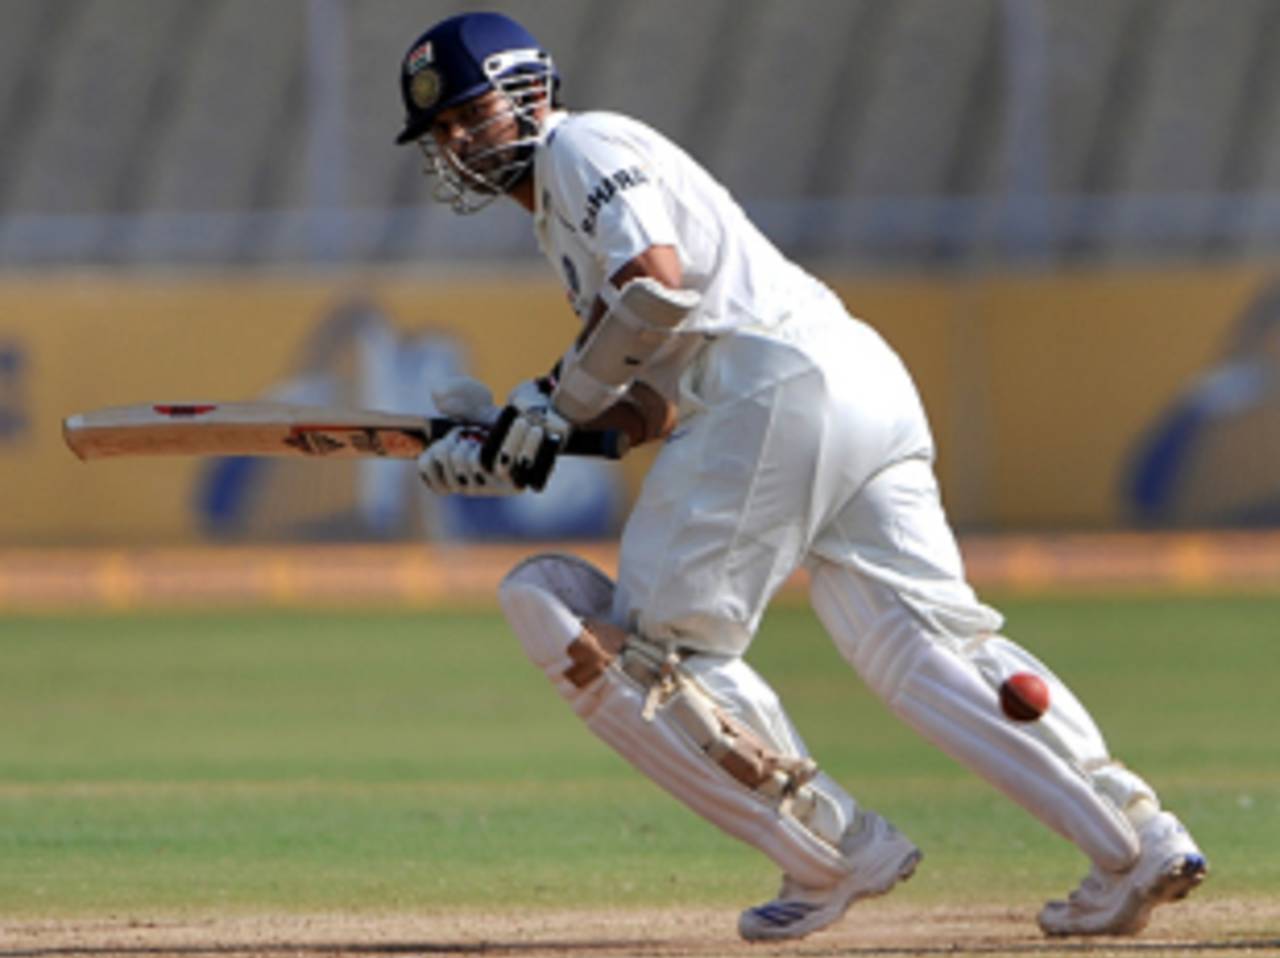 Sachin Tendulkar turns one away, India v Sri Lanka, 1st Test, Ahmedabad, 5th day, November 20, 2009 